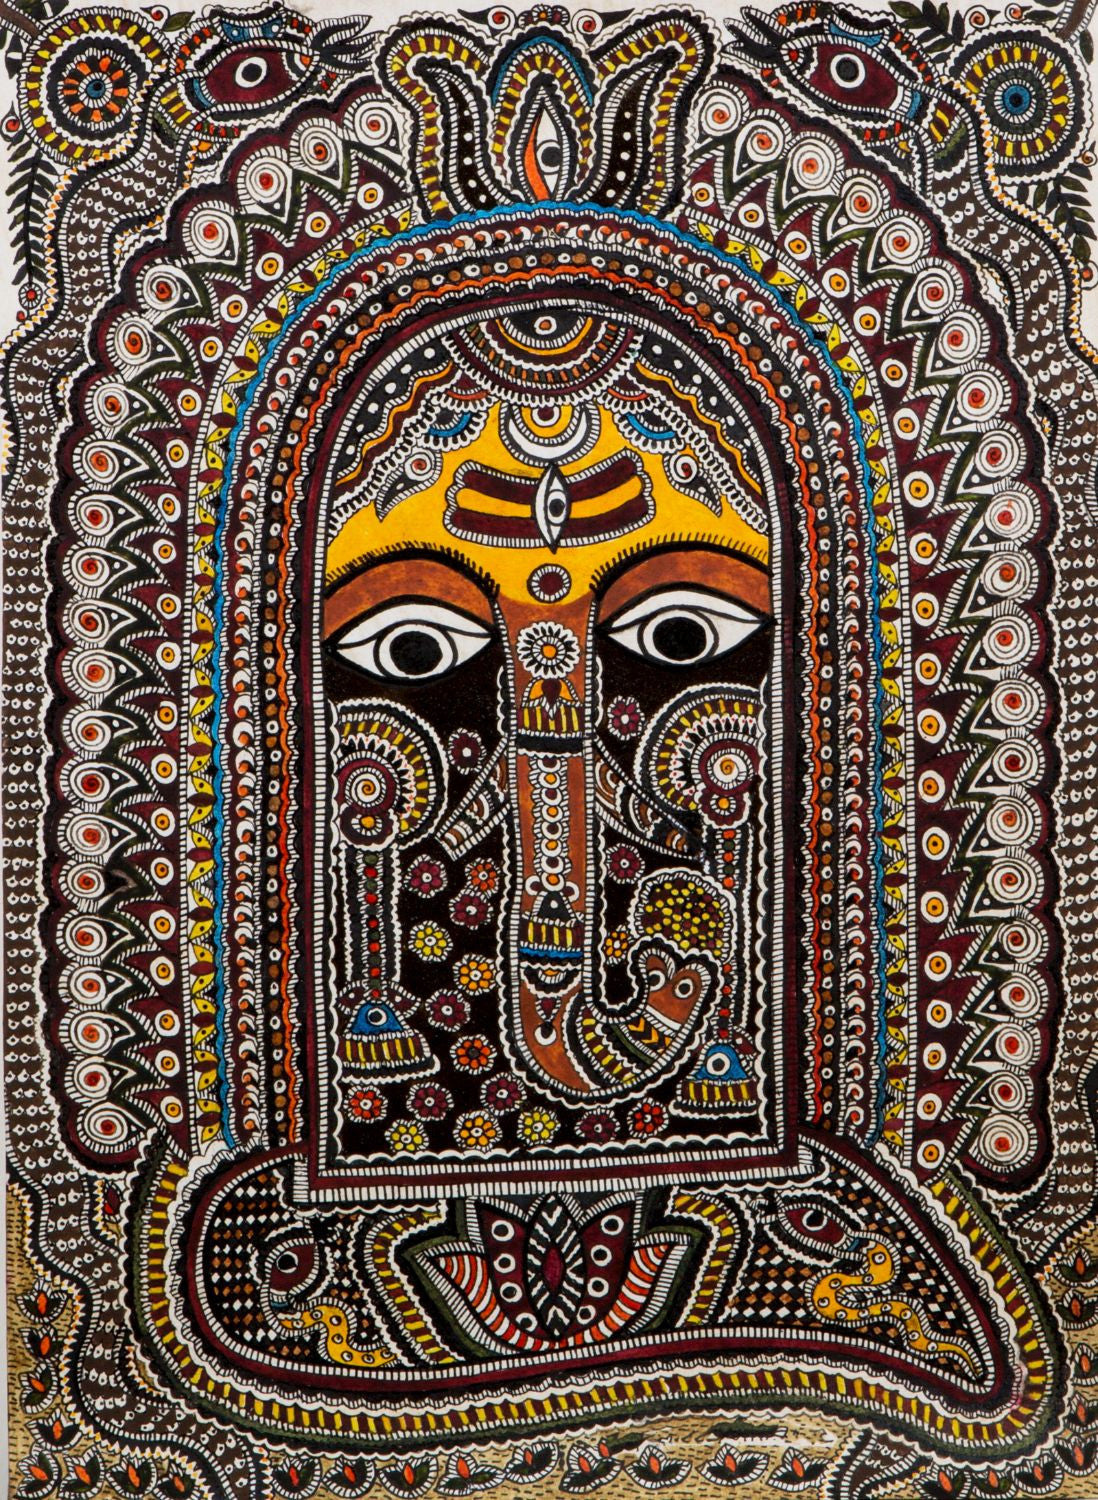 Mithila Art - Ganesha - Canvas Prints by Sina Irani | Buy Posters ...